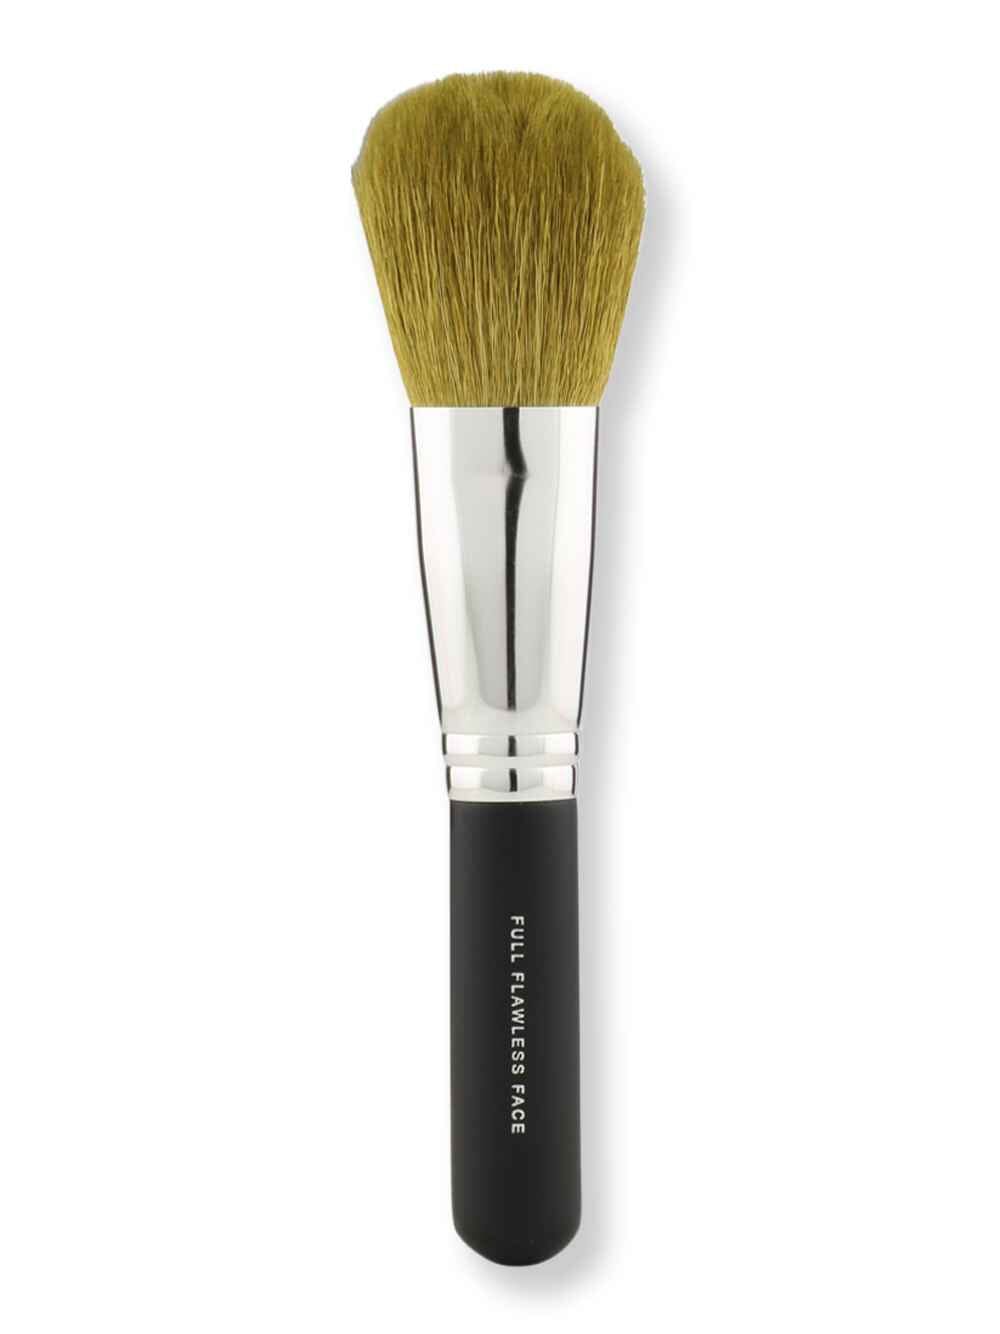 Bareminerals Bareminerals Full Flawless Face Brush Makeup Brushes 